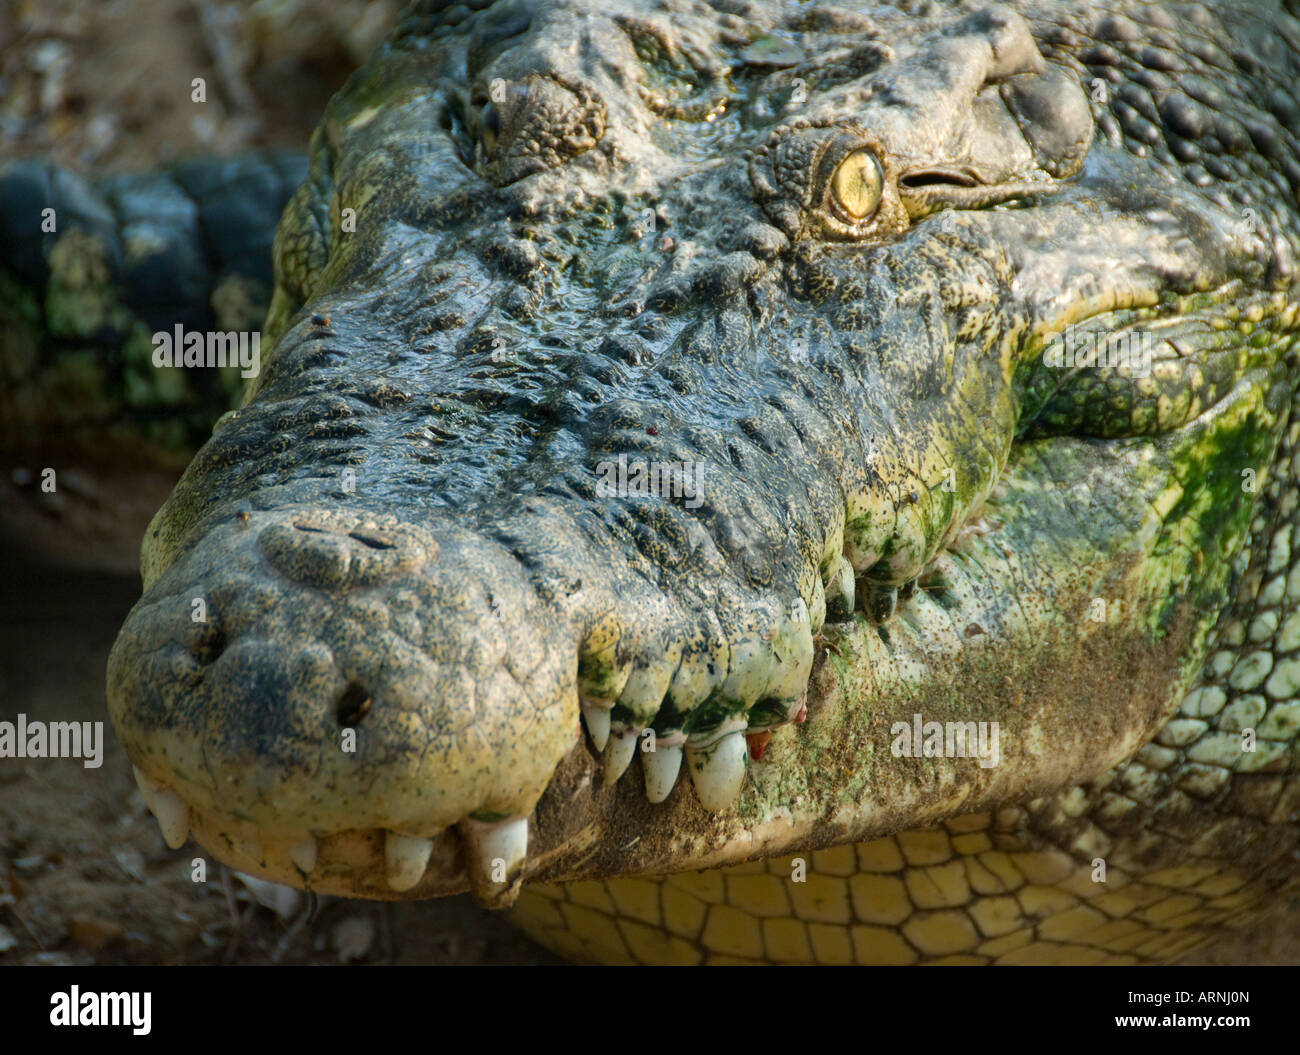 A saltwater Crocodile at the Crocodile Bank in Tamil Nadu India Stock Photo